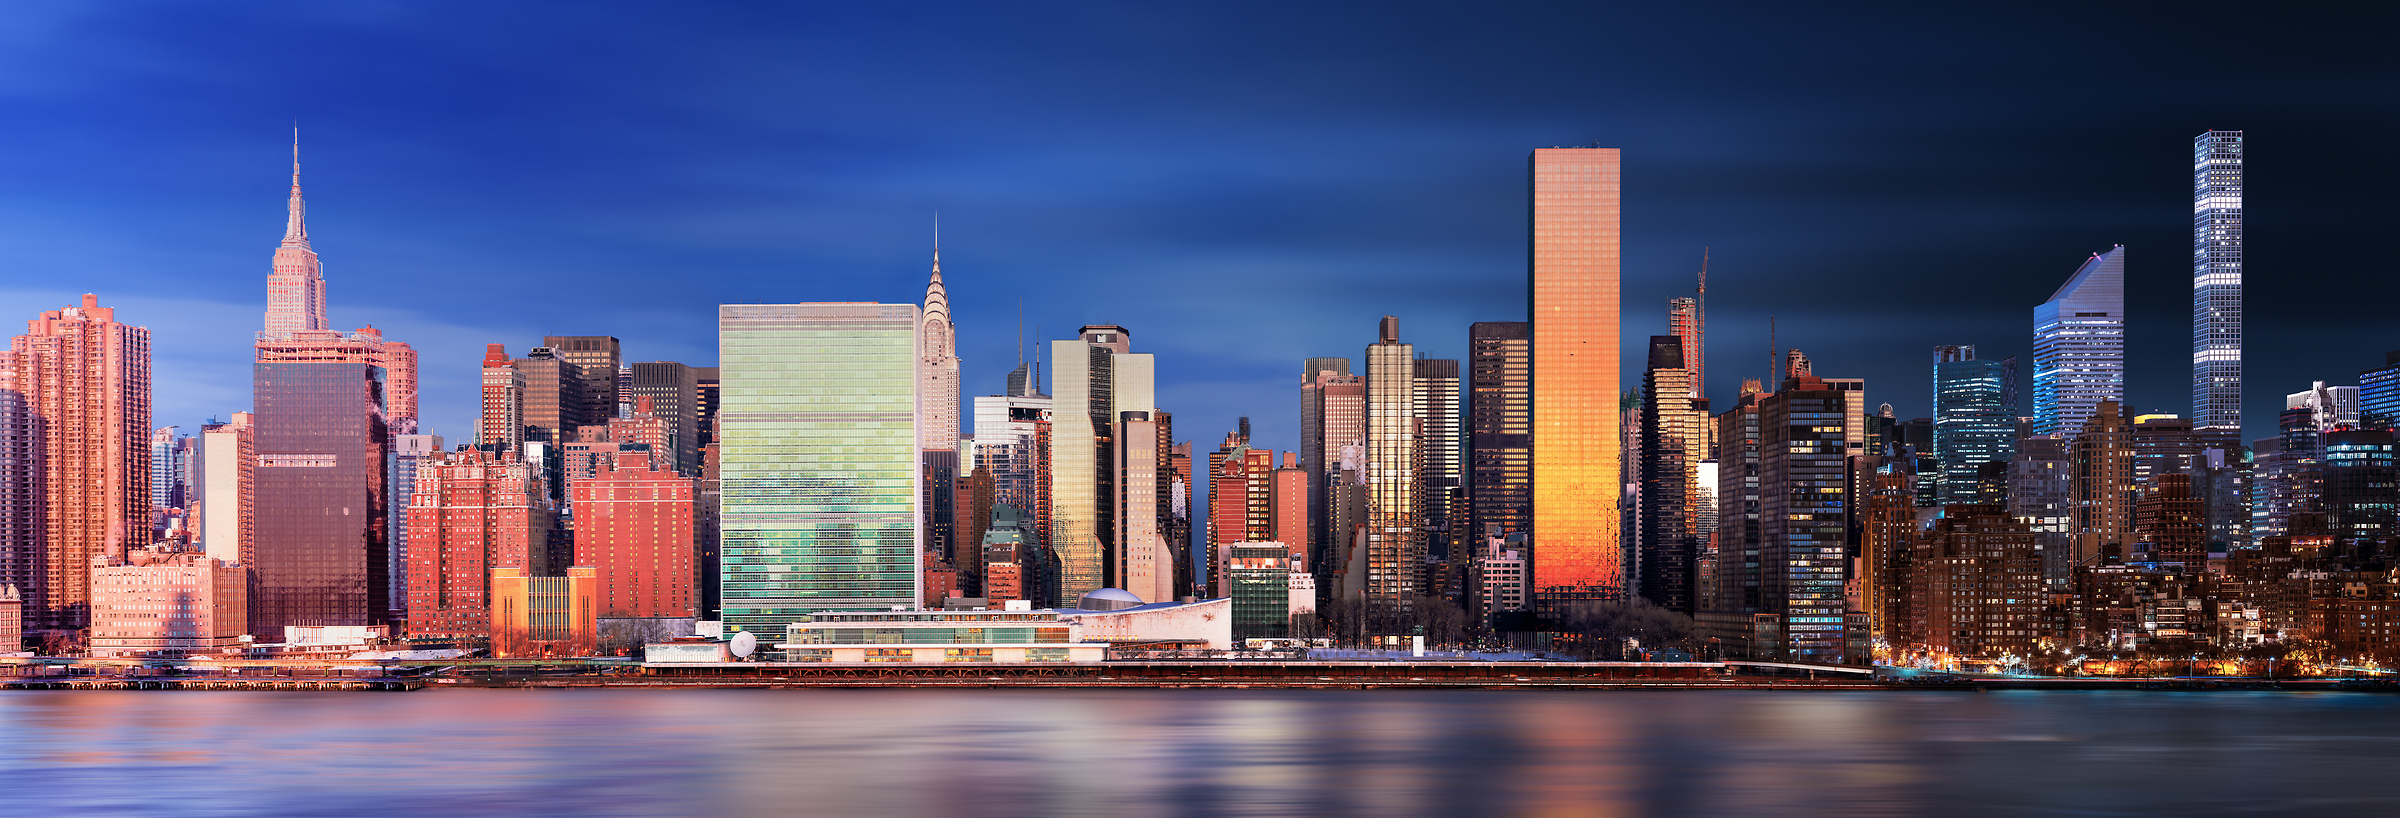 1,018 megapixels! A very high resolution photograph of the Manhattan skyline; VAST photo created by Dan Piech.